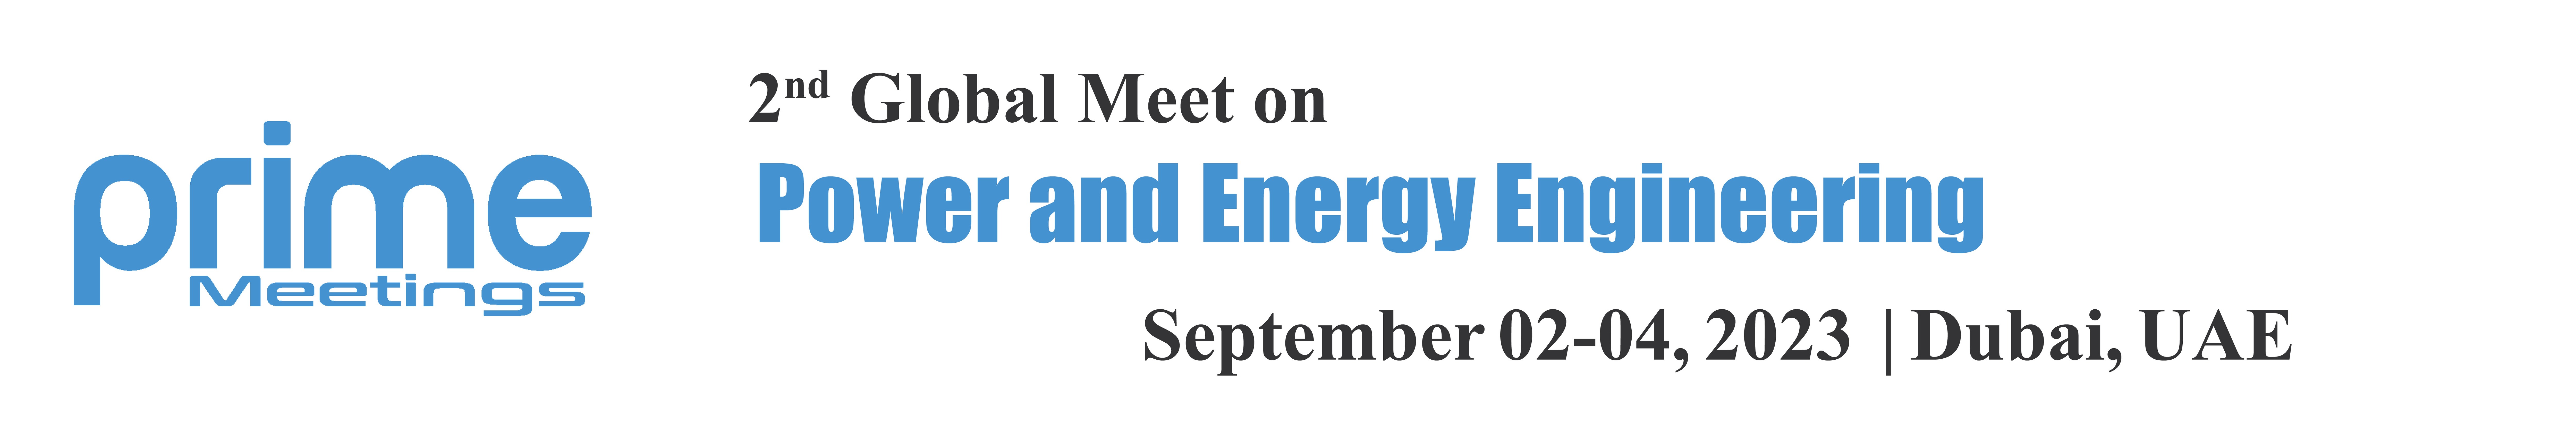 2nd Global Meet on Power and Energy Engineering, Dubai, United Arab Emirates